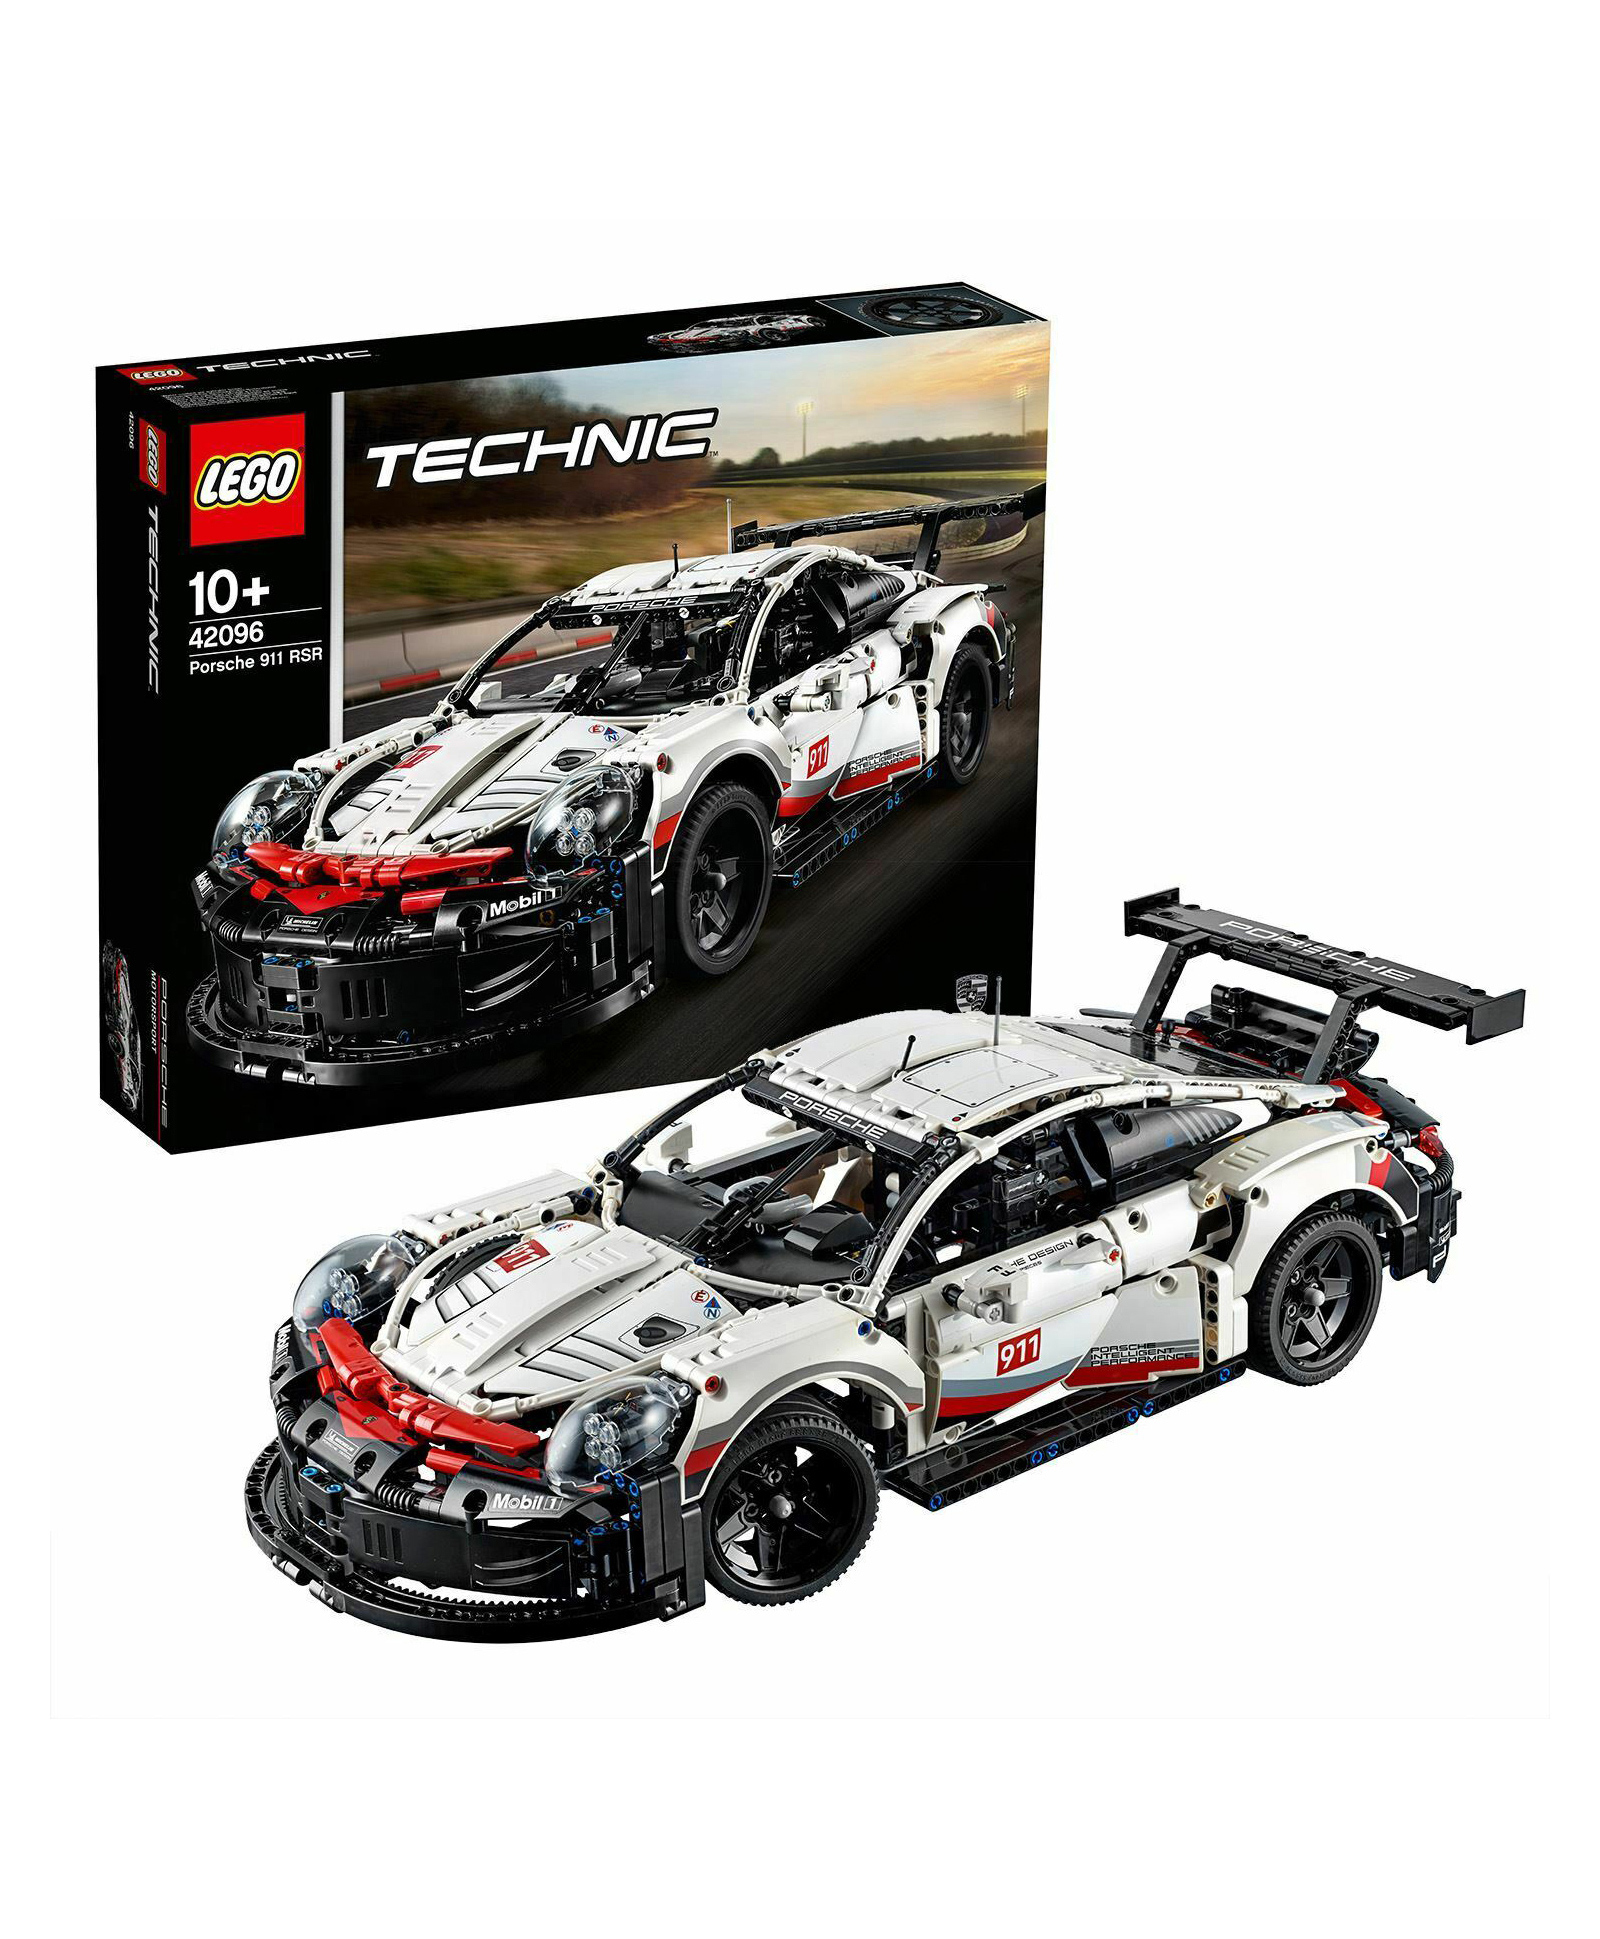 LEGO Technic Porsche 911 RSR Sports Car Set 42096 White Black - 1580 ...